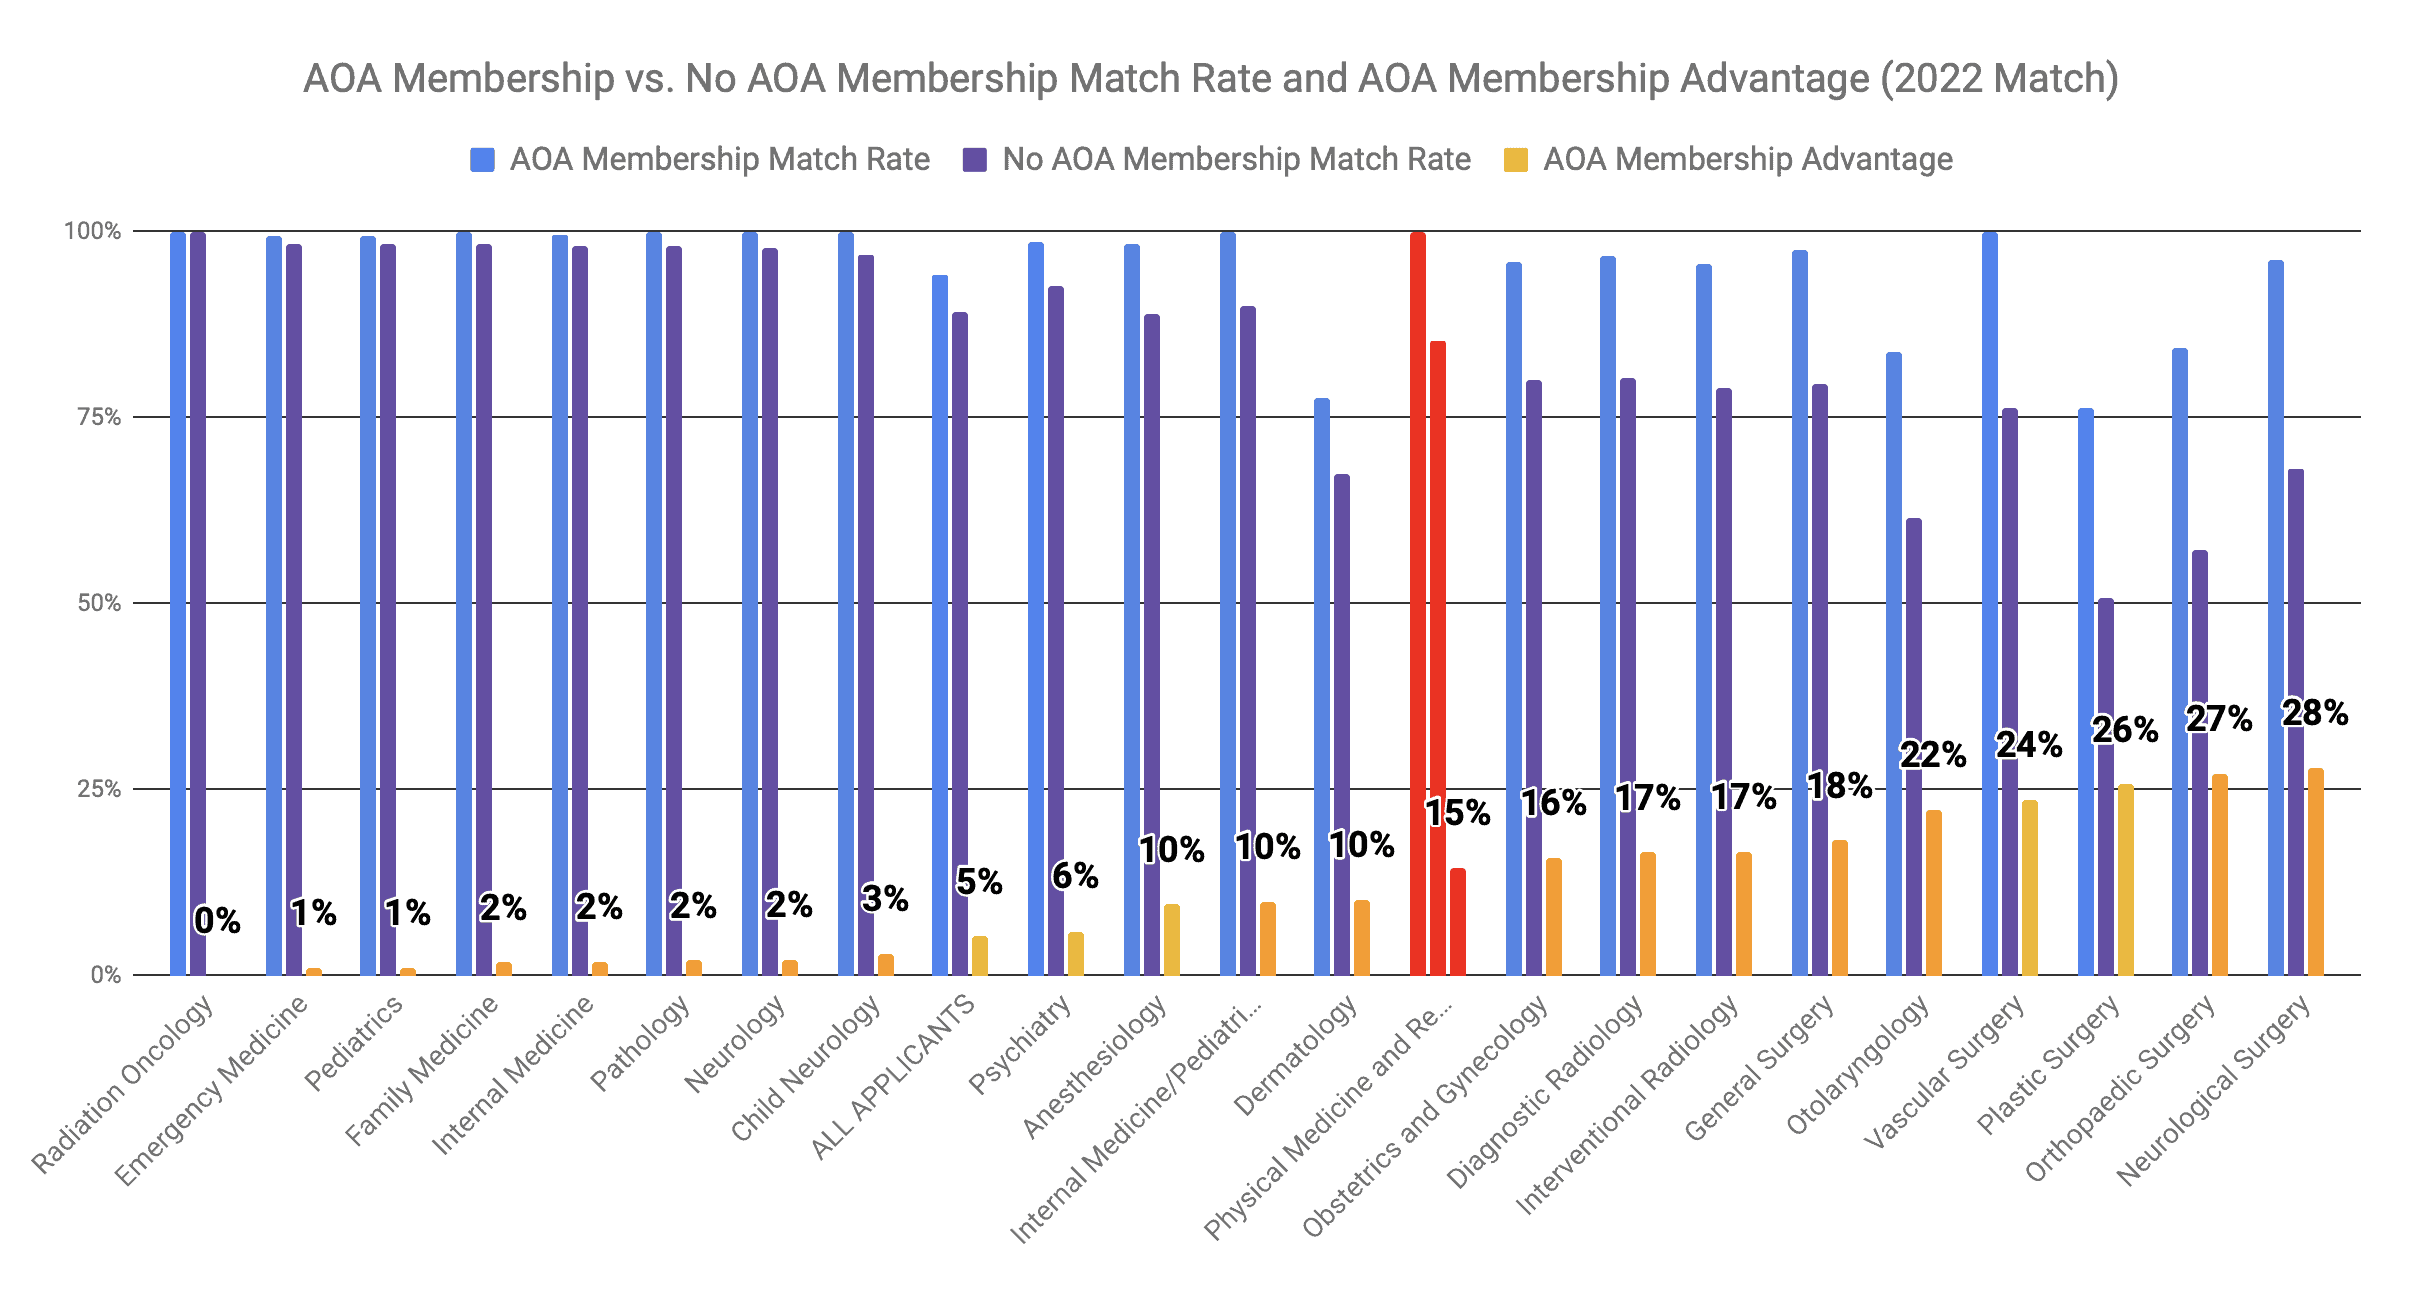 AOA Membership Advantage for Physical Medicine and Rehabilitation 2022